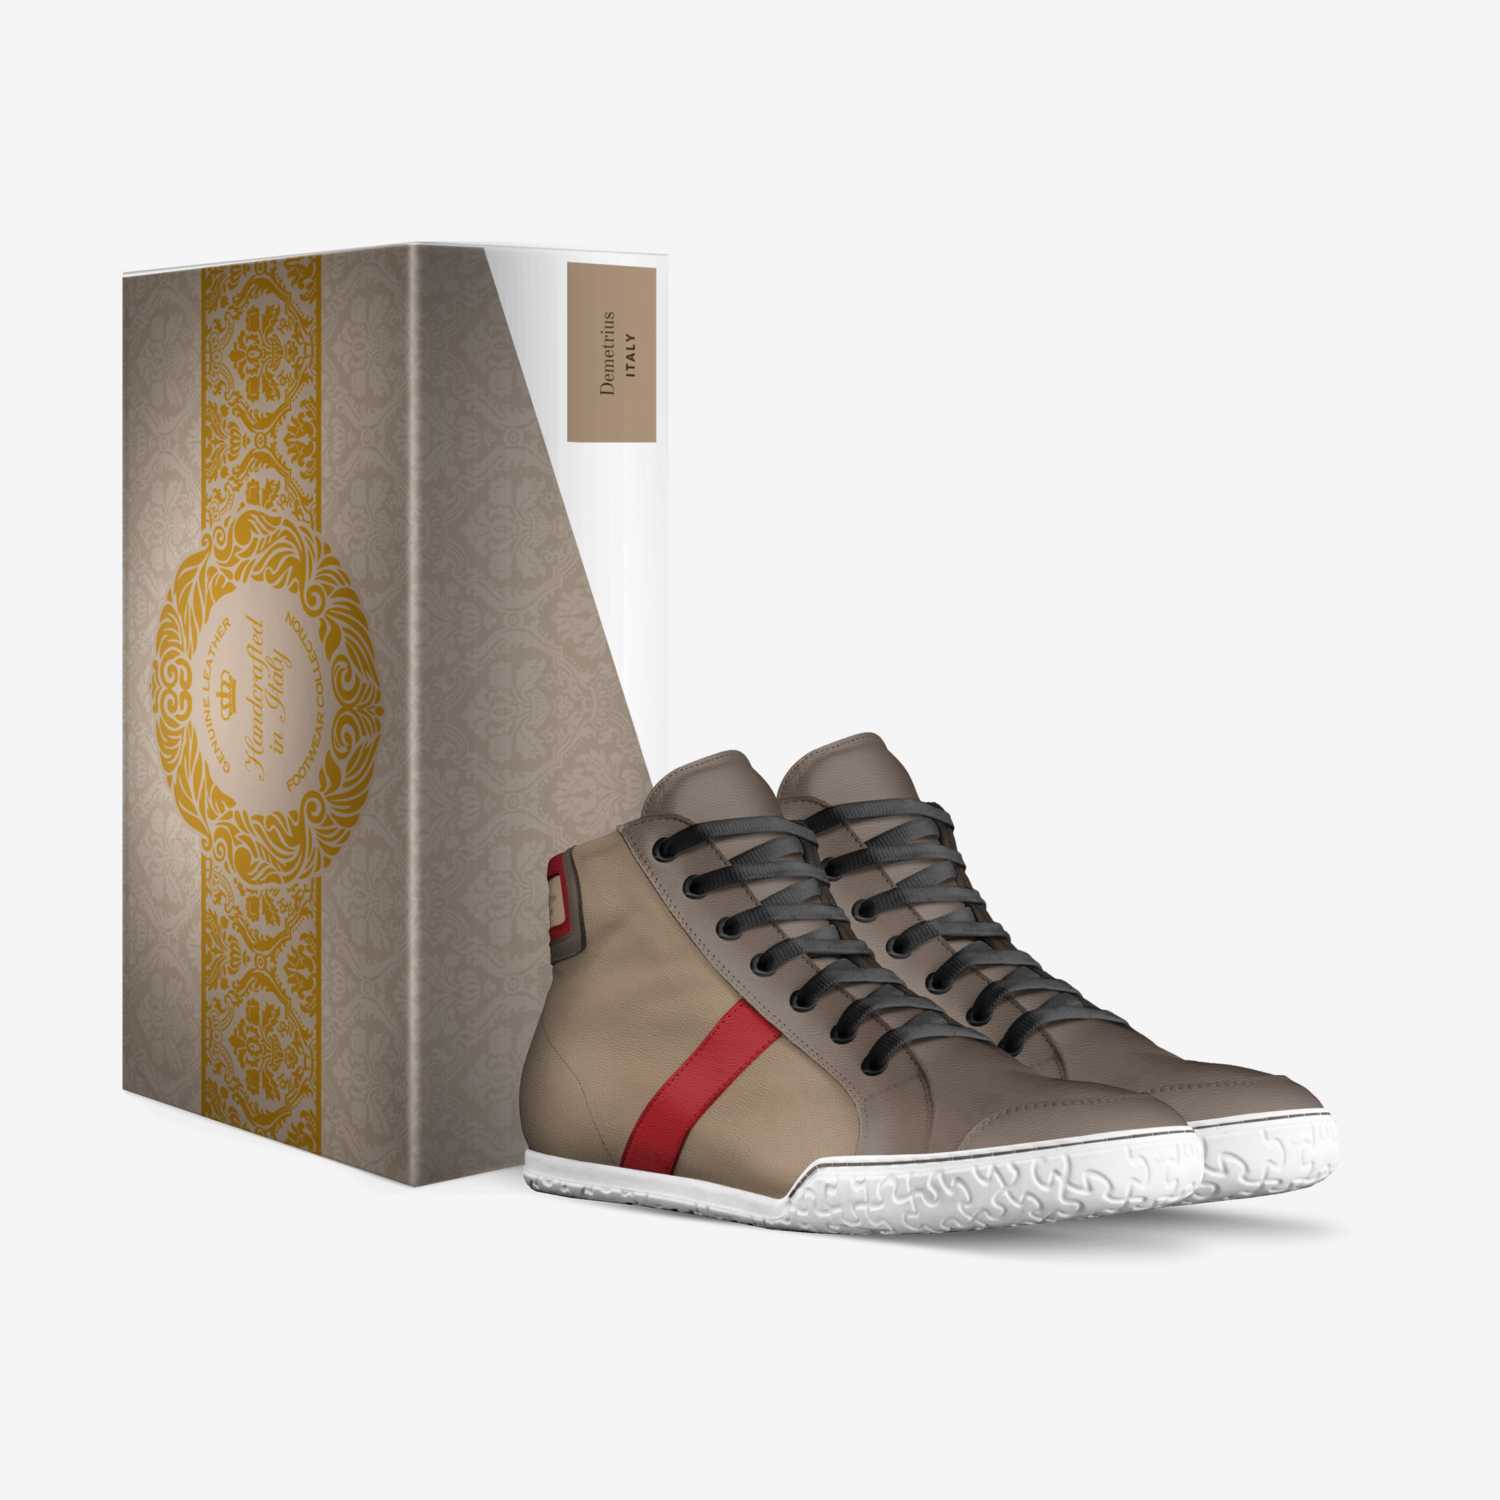 Demetrius custom made in Italy shoes by Nicholas Silva | Box view